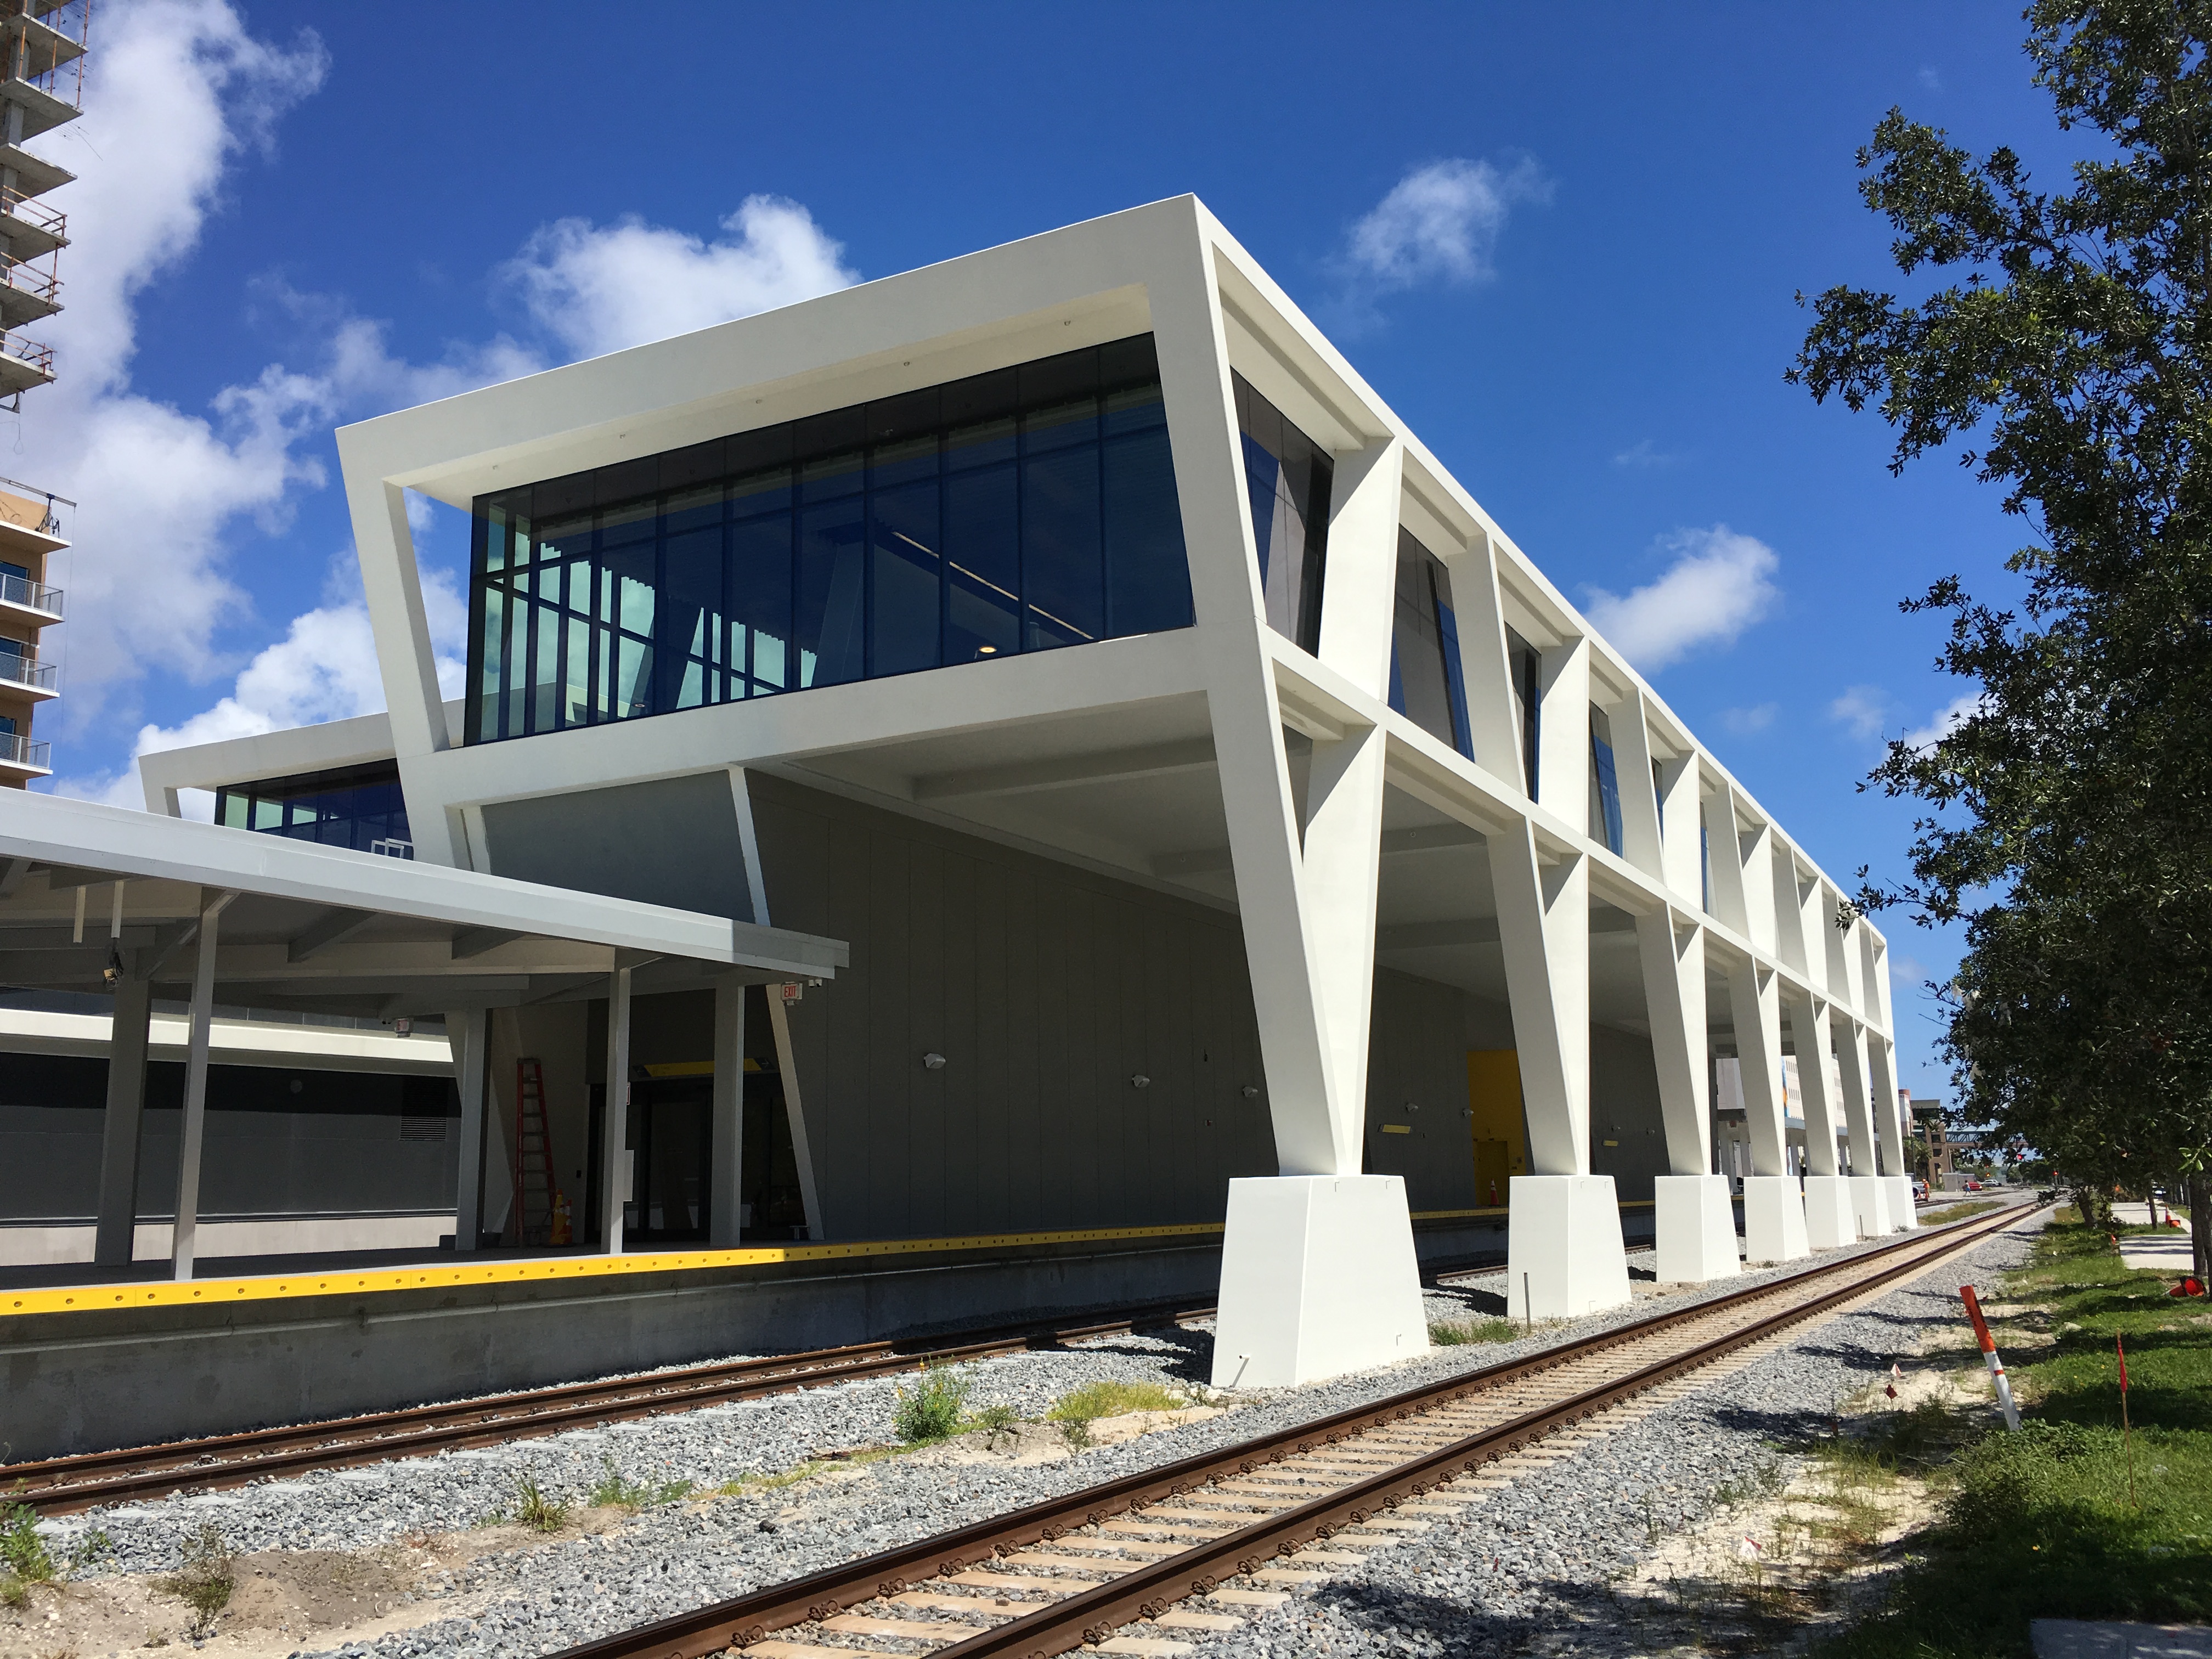 West Palm Beach station - Wikipedia